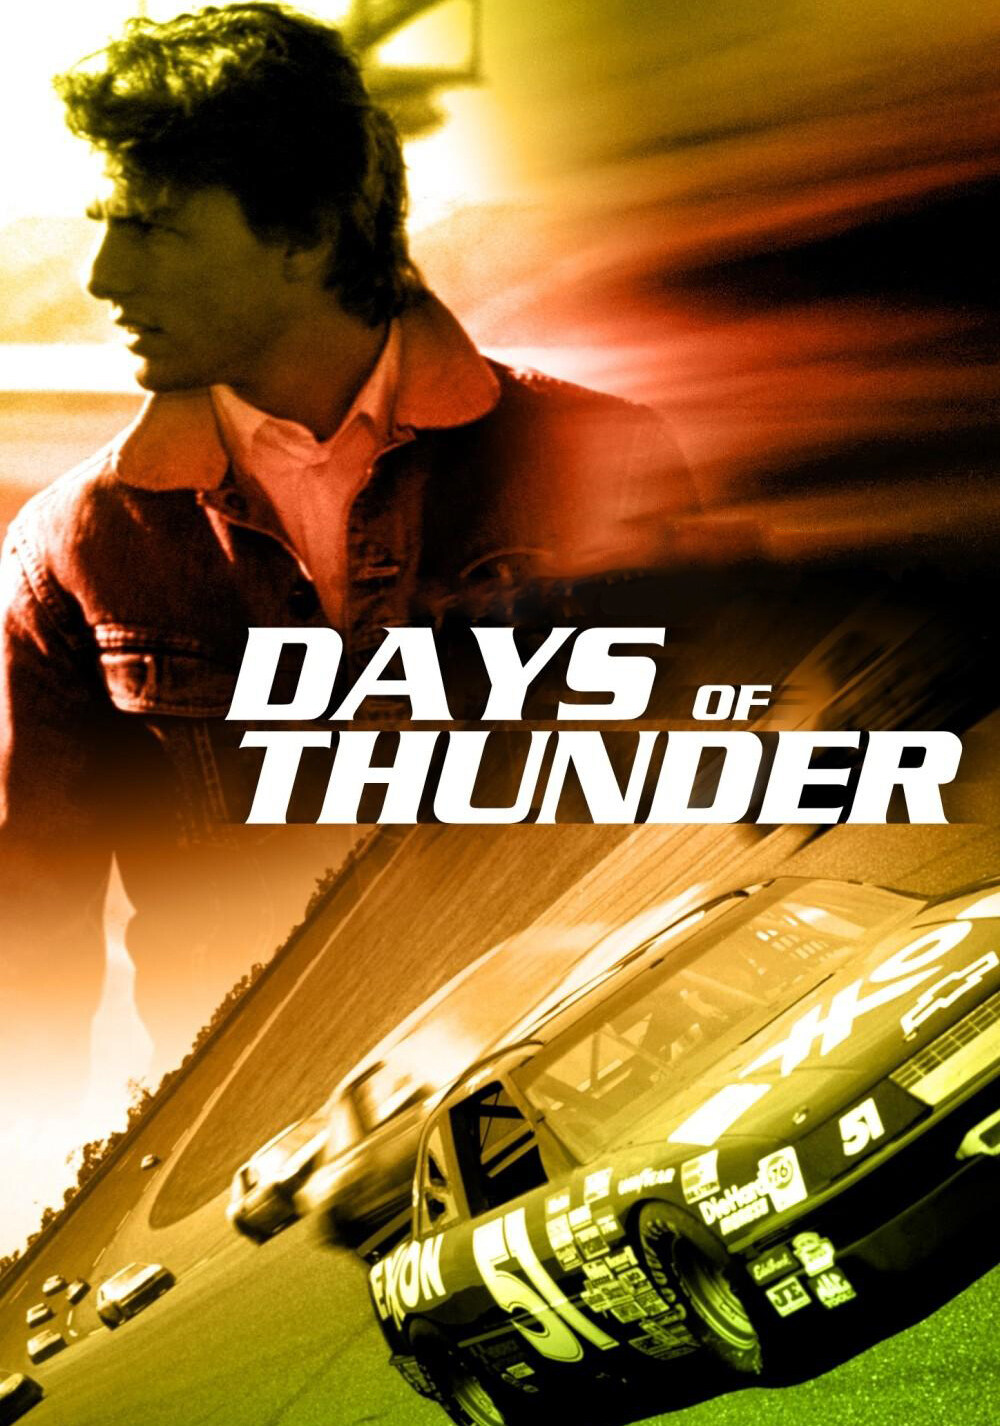 Days of Thunder ซิ่งสายฟ้า (1990) DVD หนัง มาสเตอร์ พากย์ไทย | Lazada.co.th